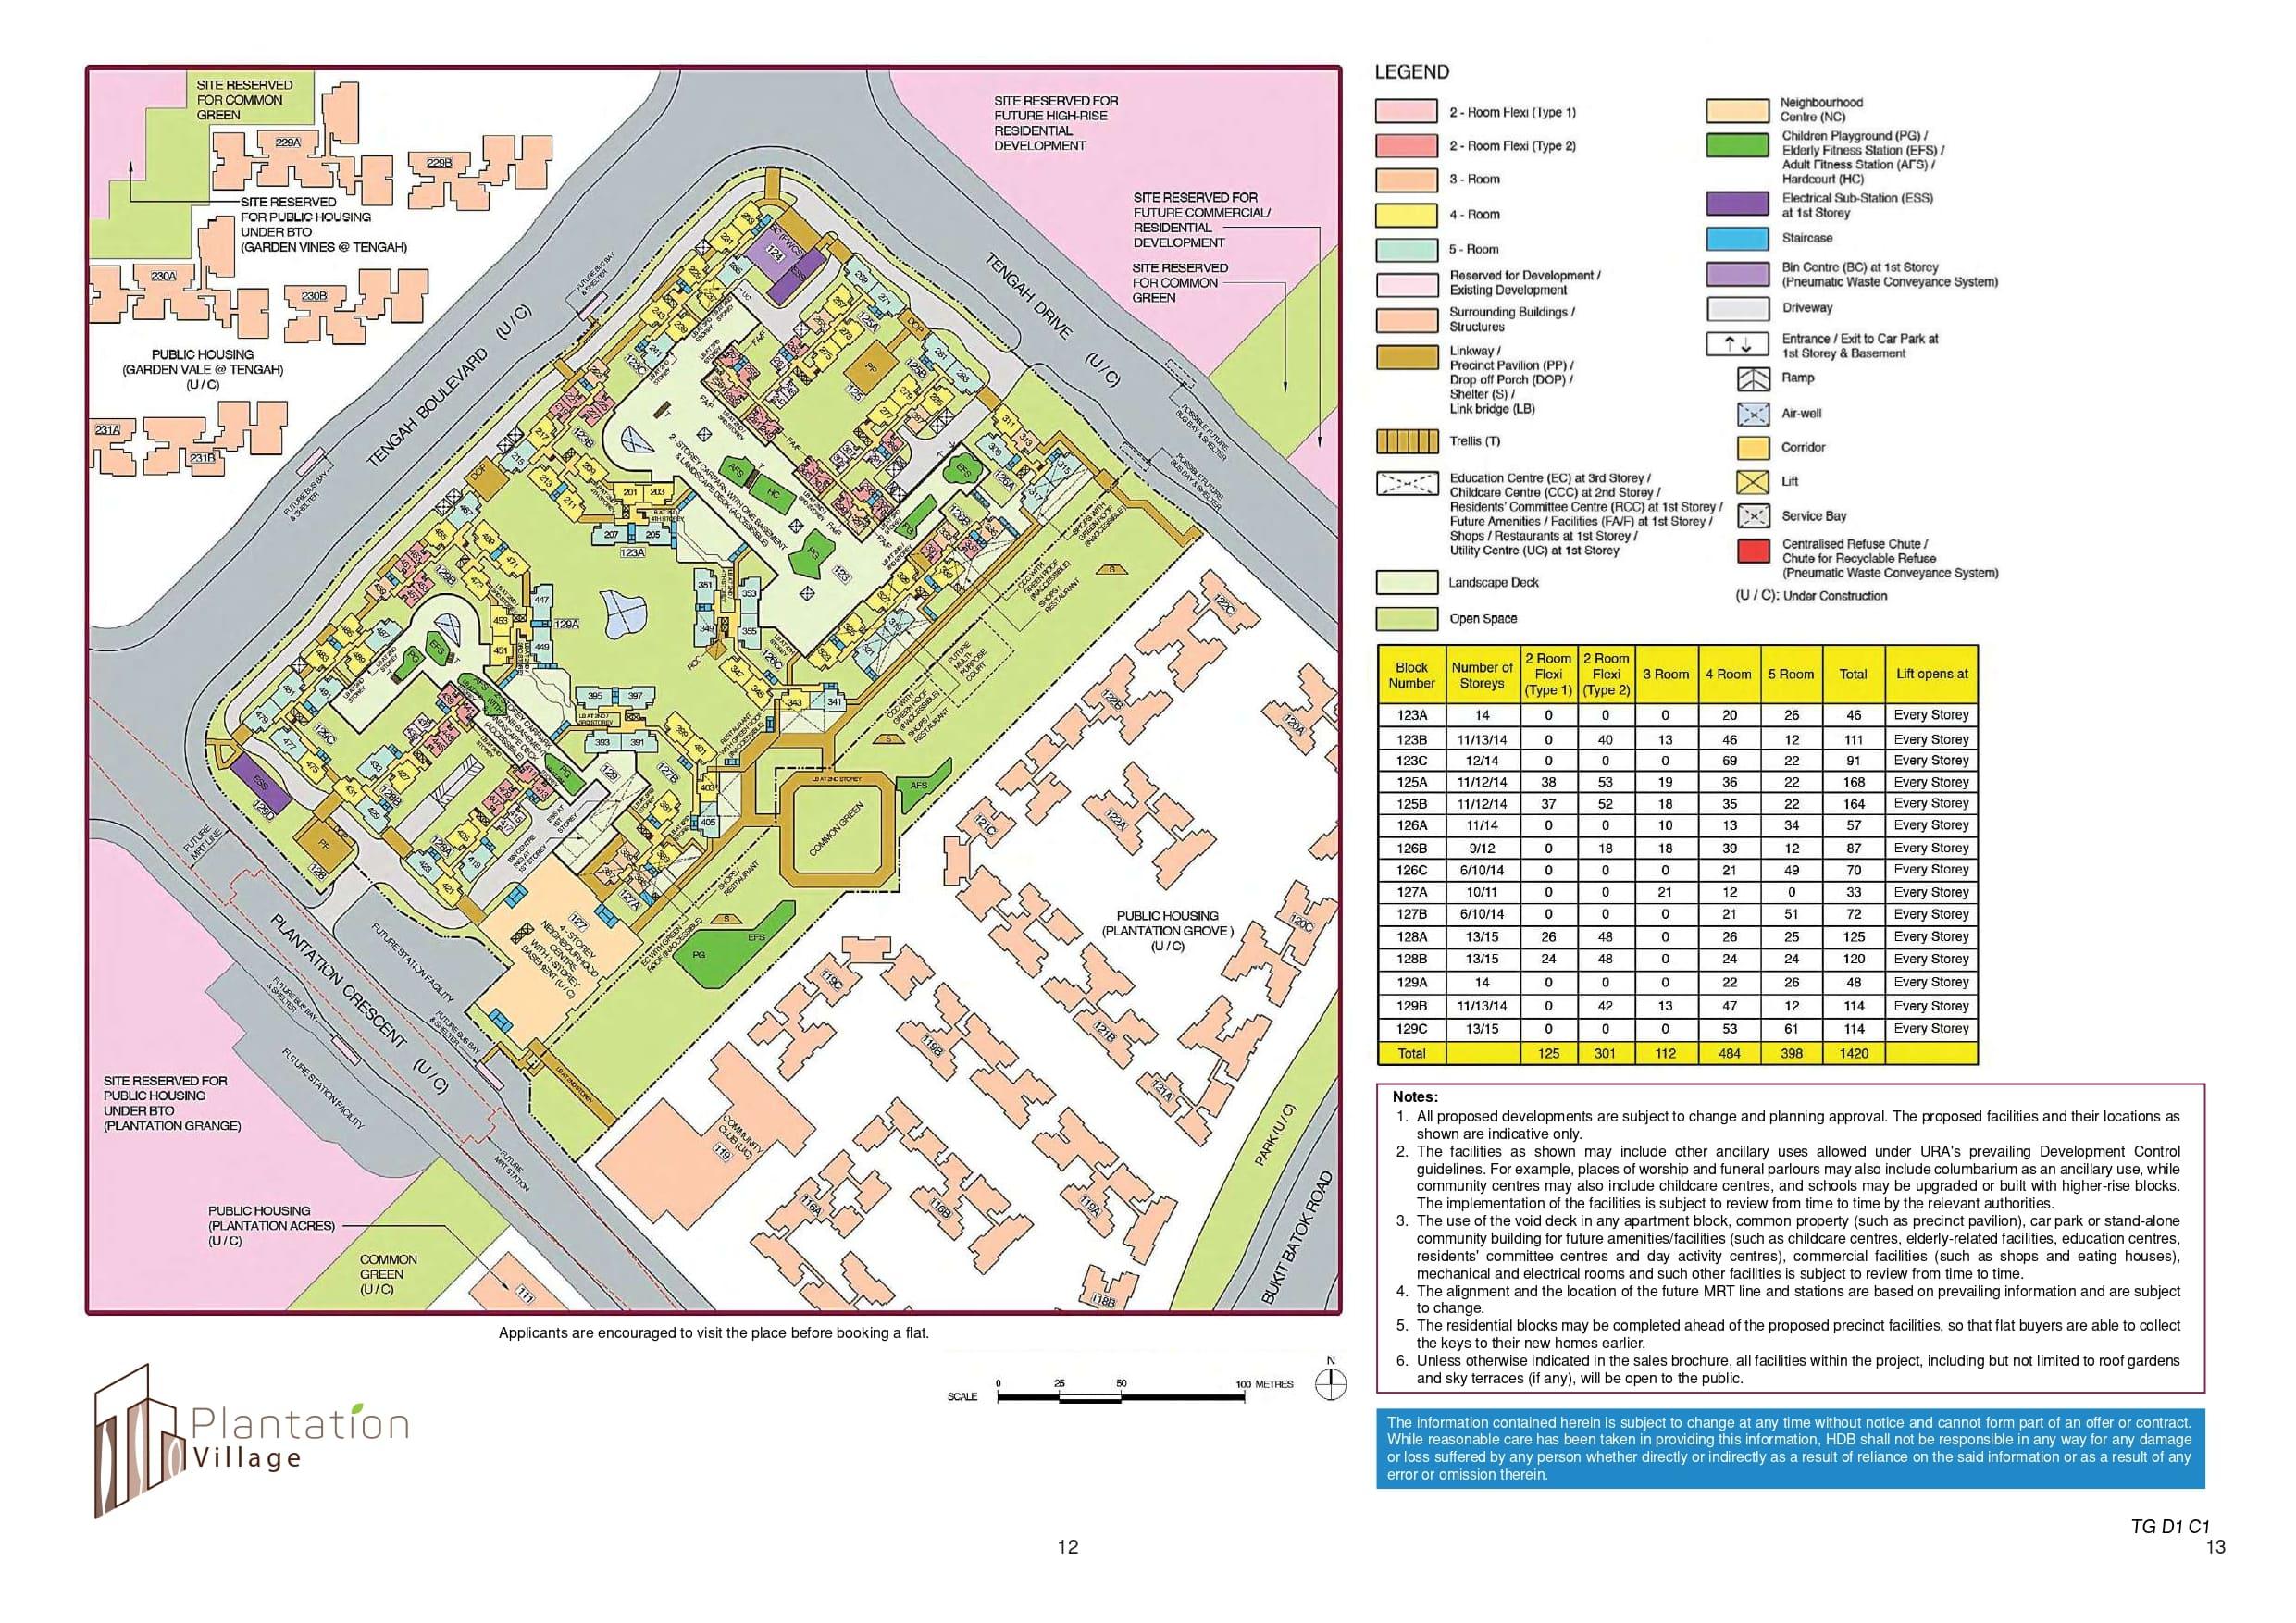 Plantation Village site-plan